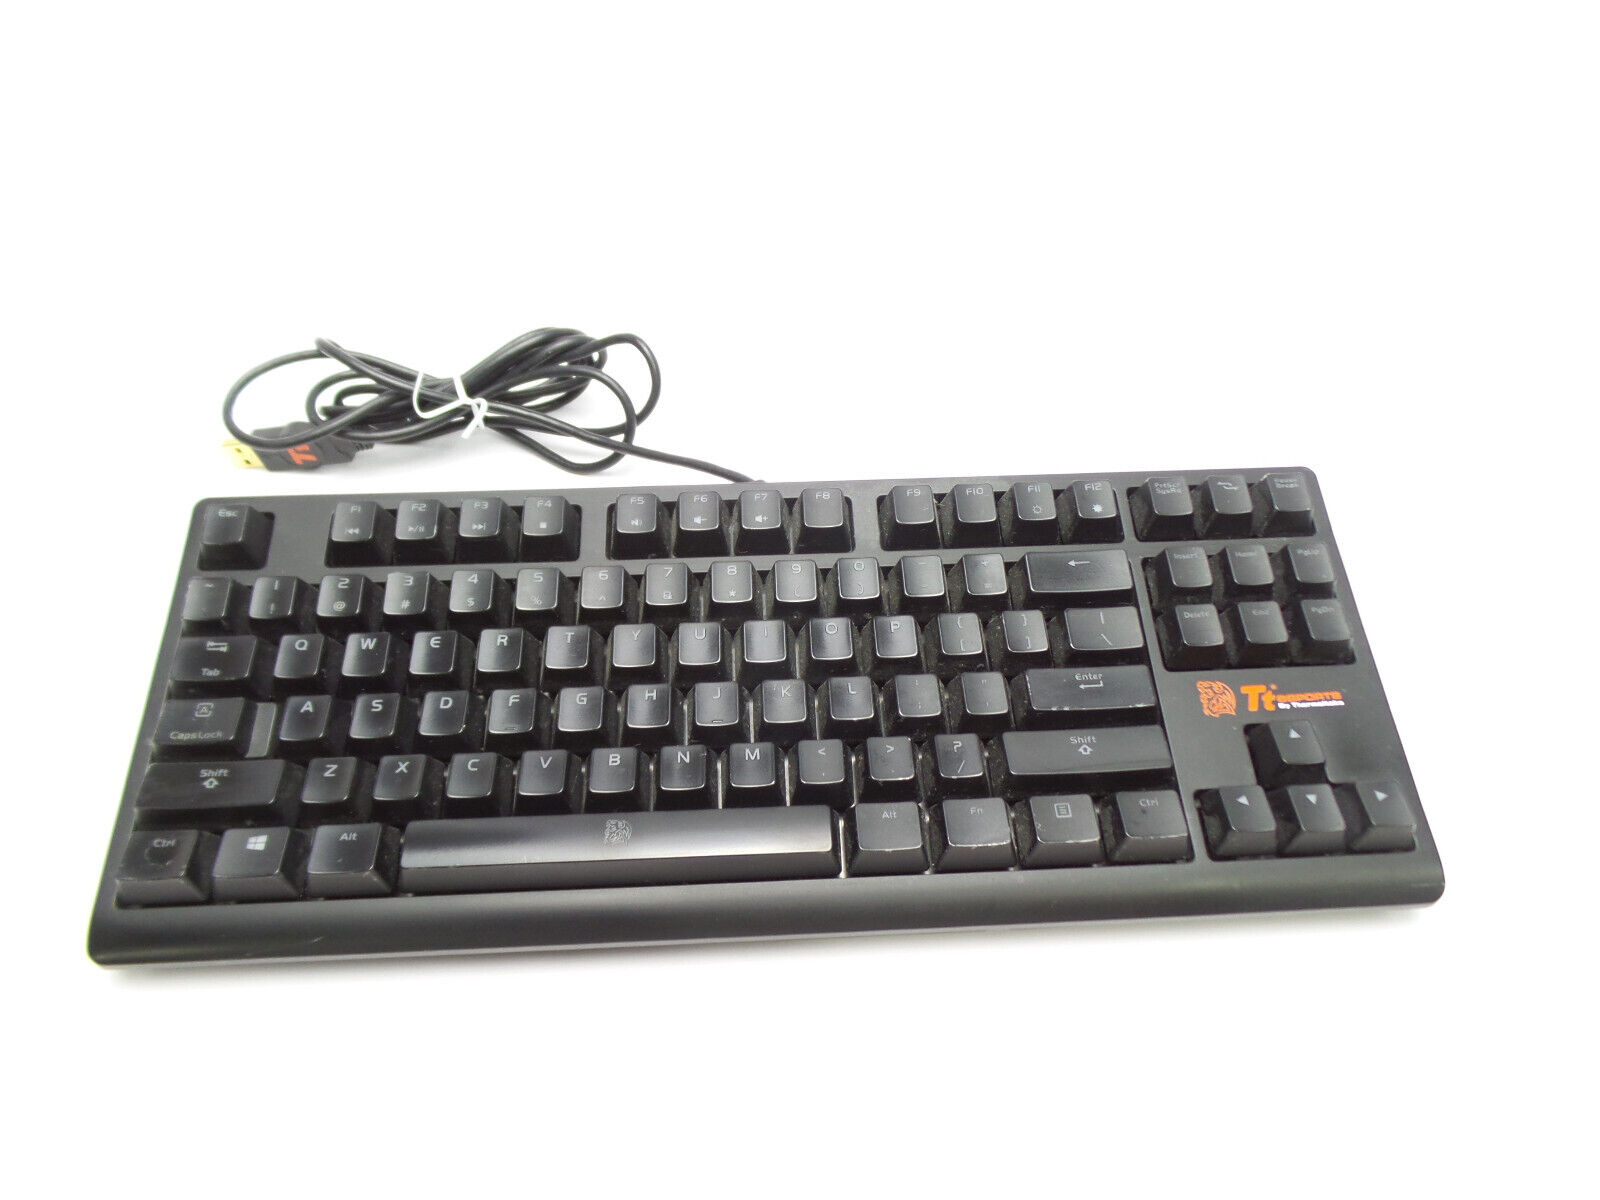 Thermaltake Poseidon ZX- Mechanical Gaming Keyboard- Blue Switch kb-pzx